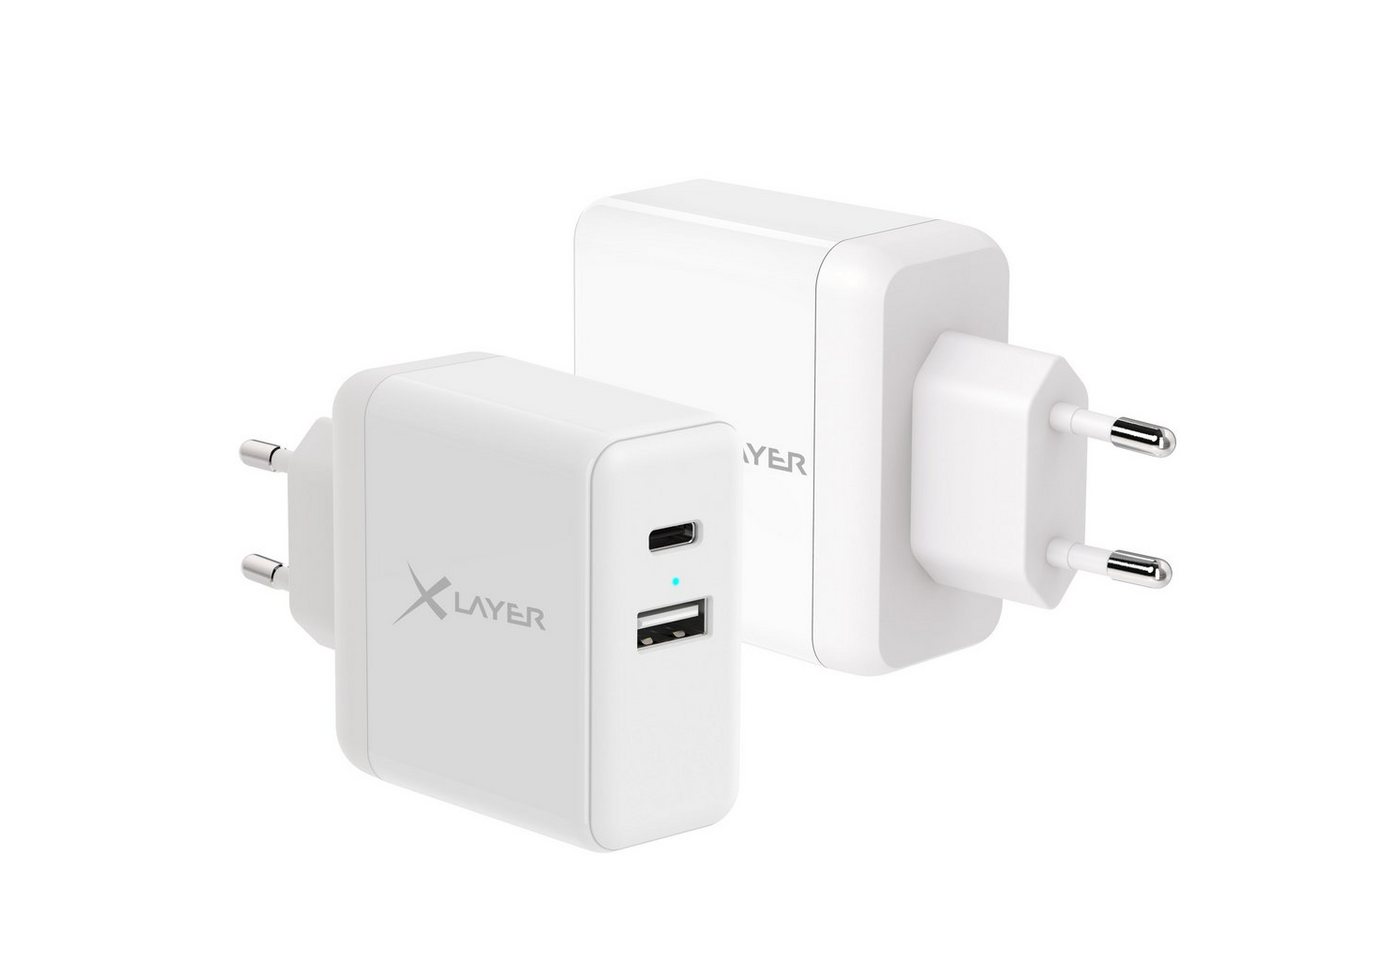 XLAYER Ladegerät XLayer USB QC3.0 + 5V/2.4A Netzteil Smartphone-Ladegerät von XLAYER